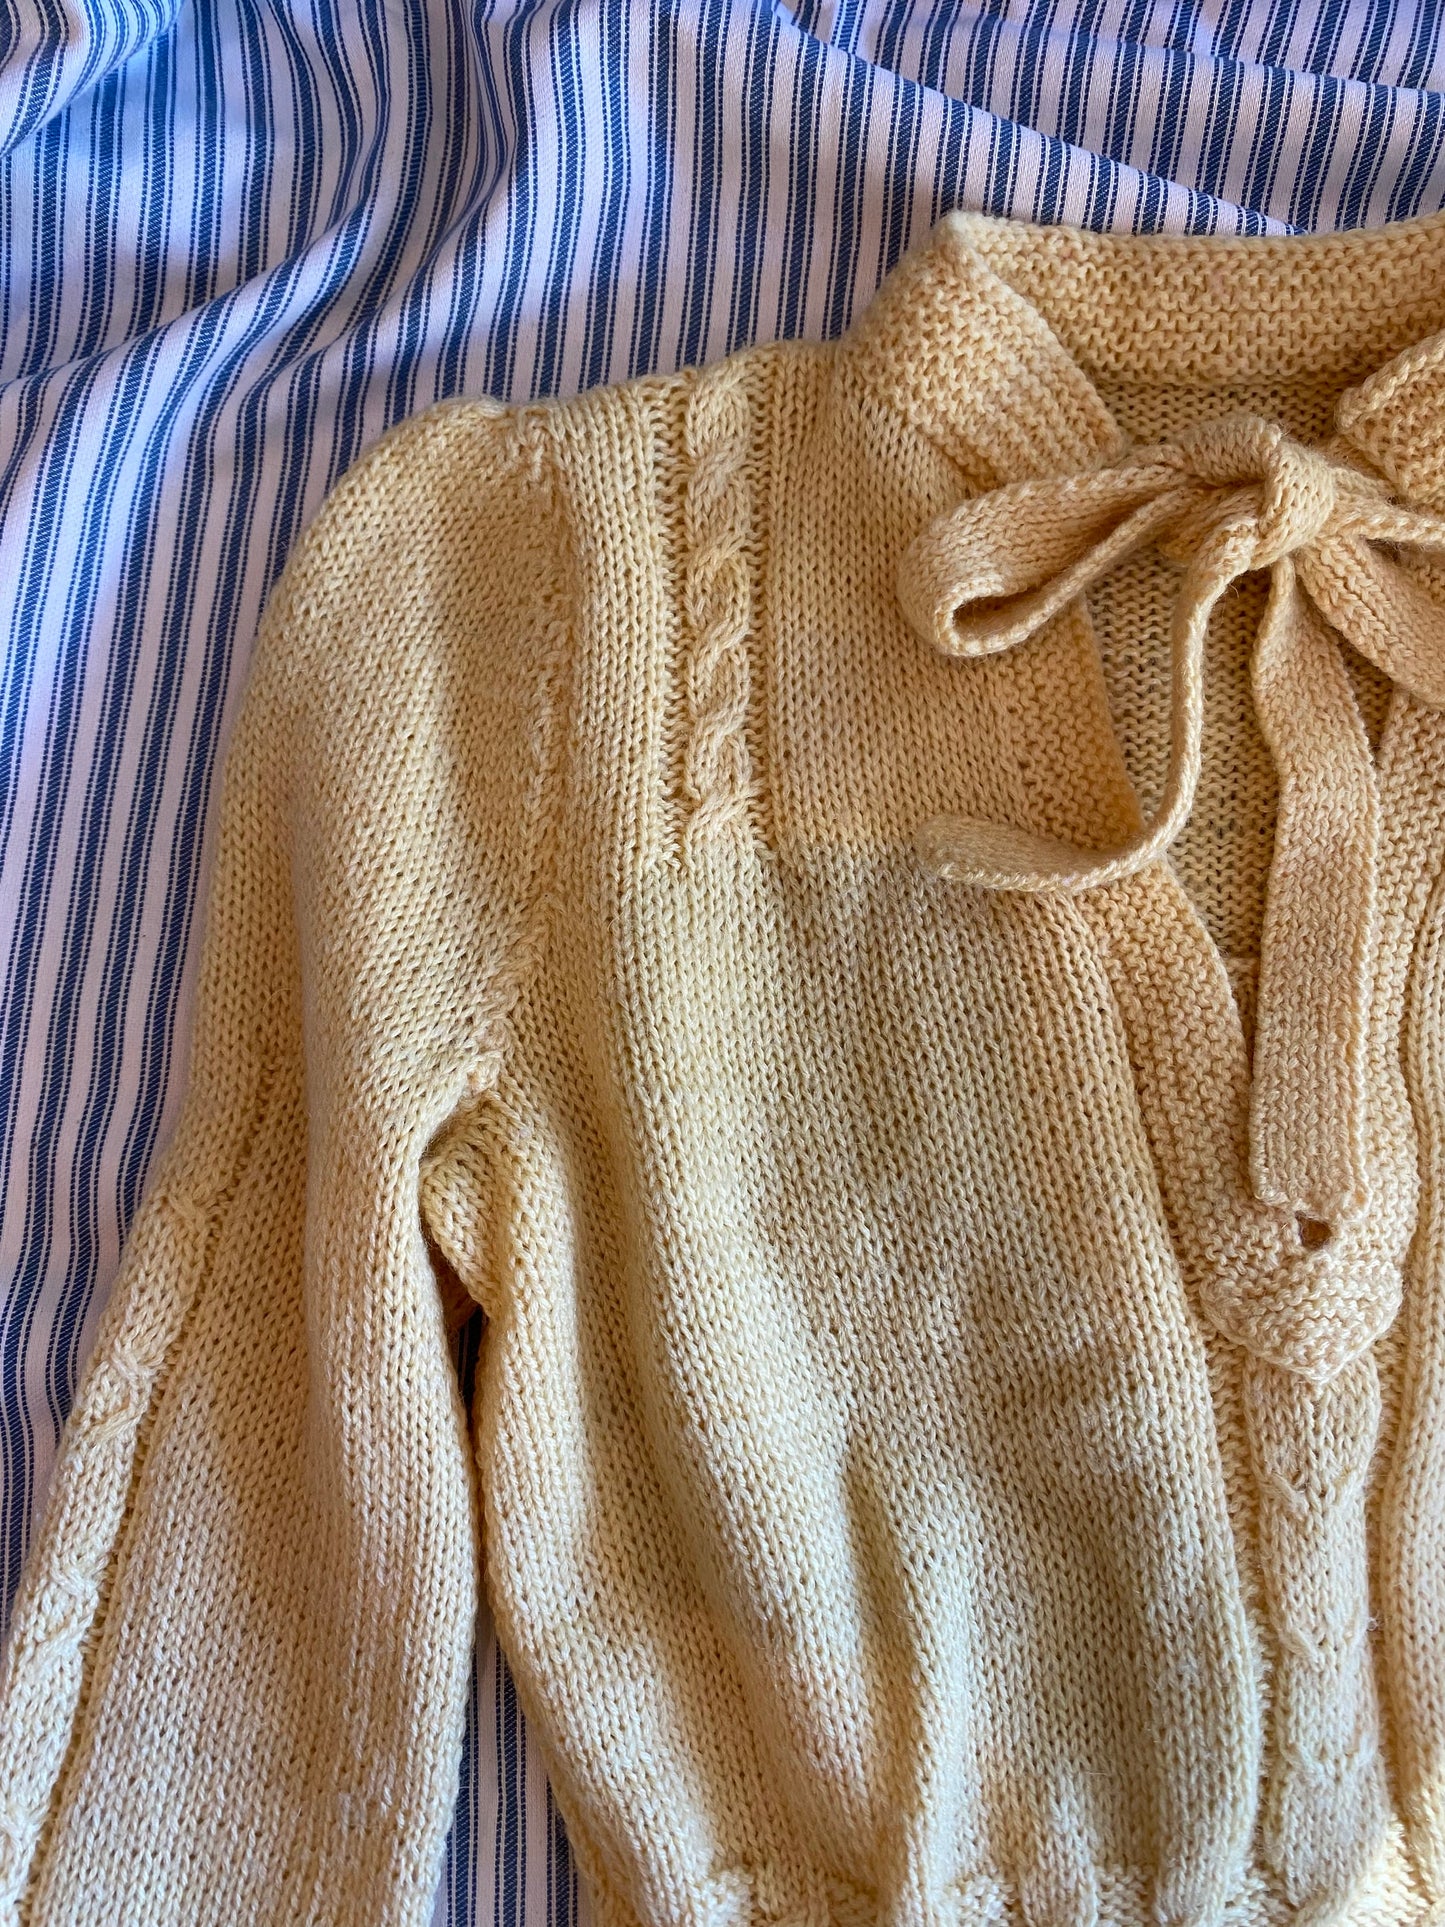 1930s Lemon Custard Yellow Puffed Shoulder Knit Sweater- S/M